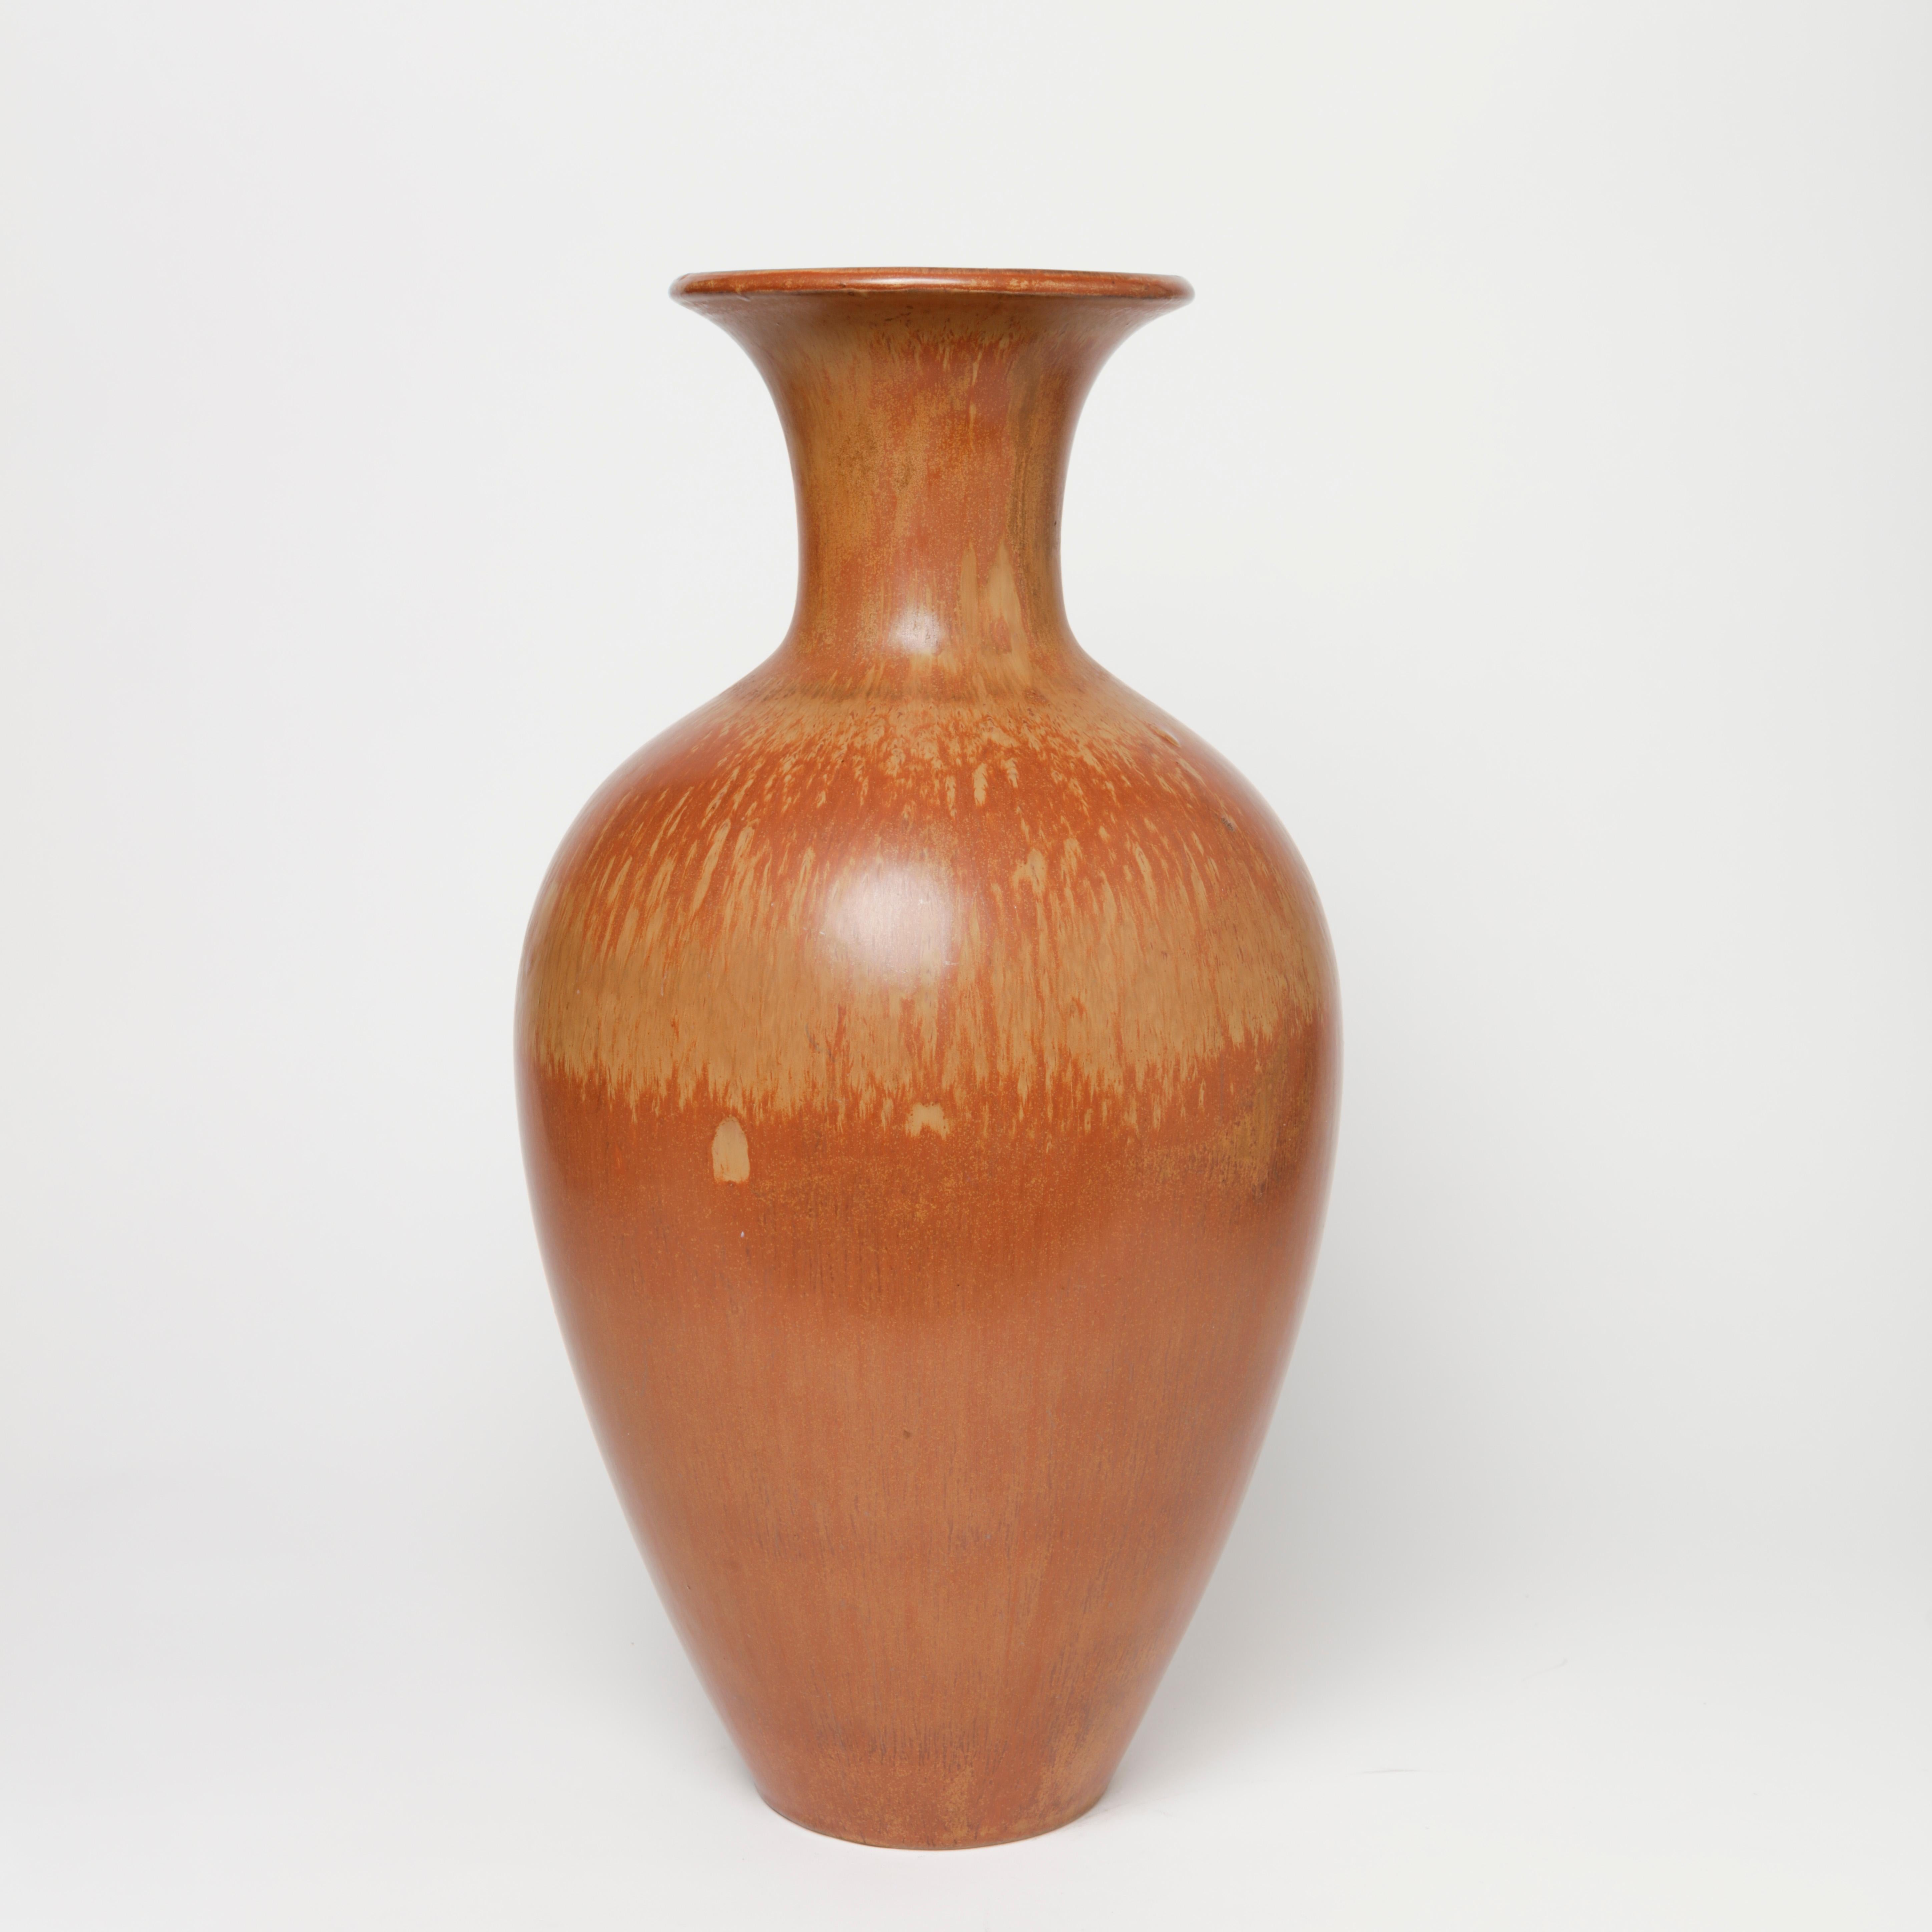 Stoneware floor vase by Gunnar Nylund for Rörstrand 1950s with light brown harefur glaze.
Measure: Height 43.5cm/17.1